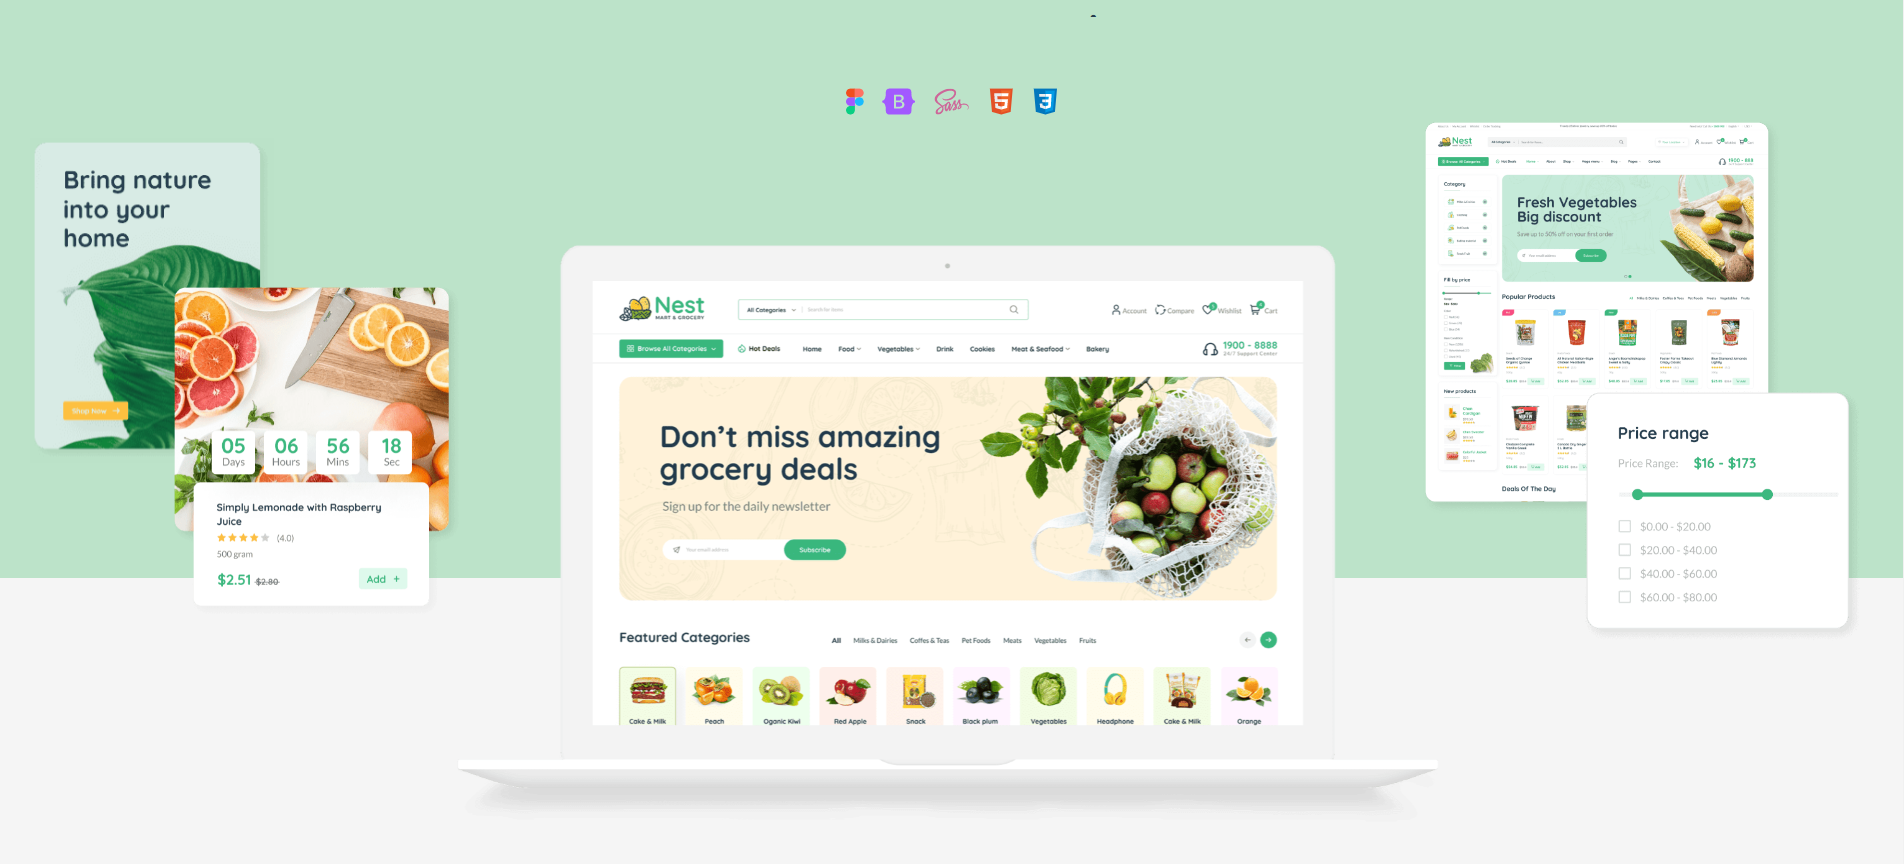 Miami marketing agencies usa - company marketing usa web design online store restaurant online restaurant delivery marketing for restaurant